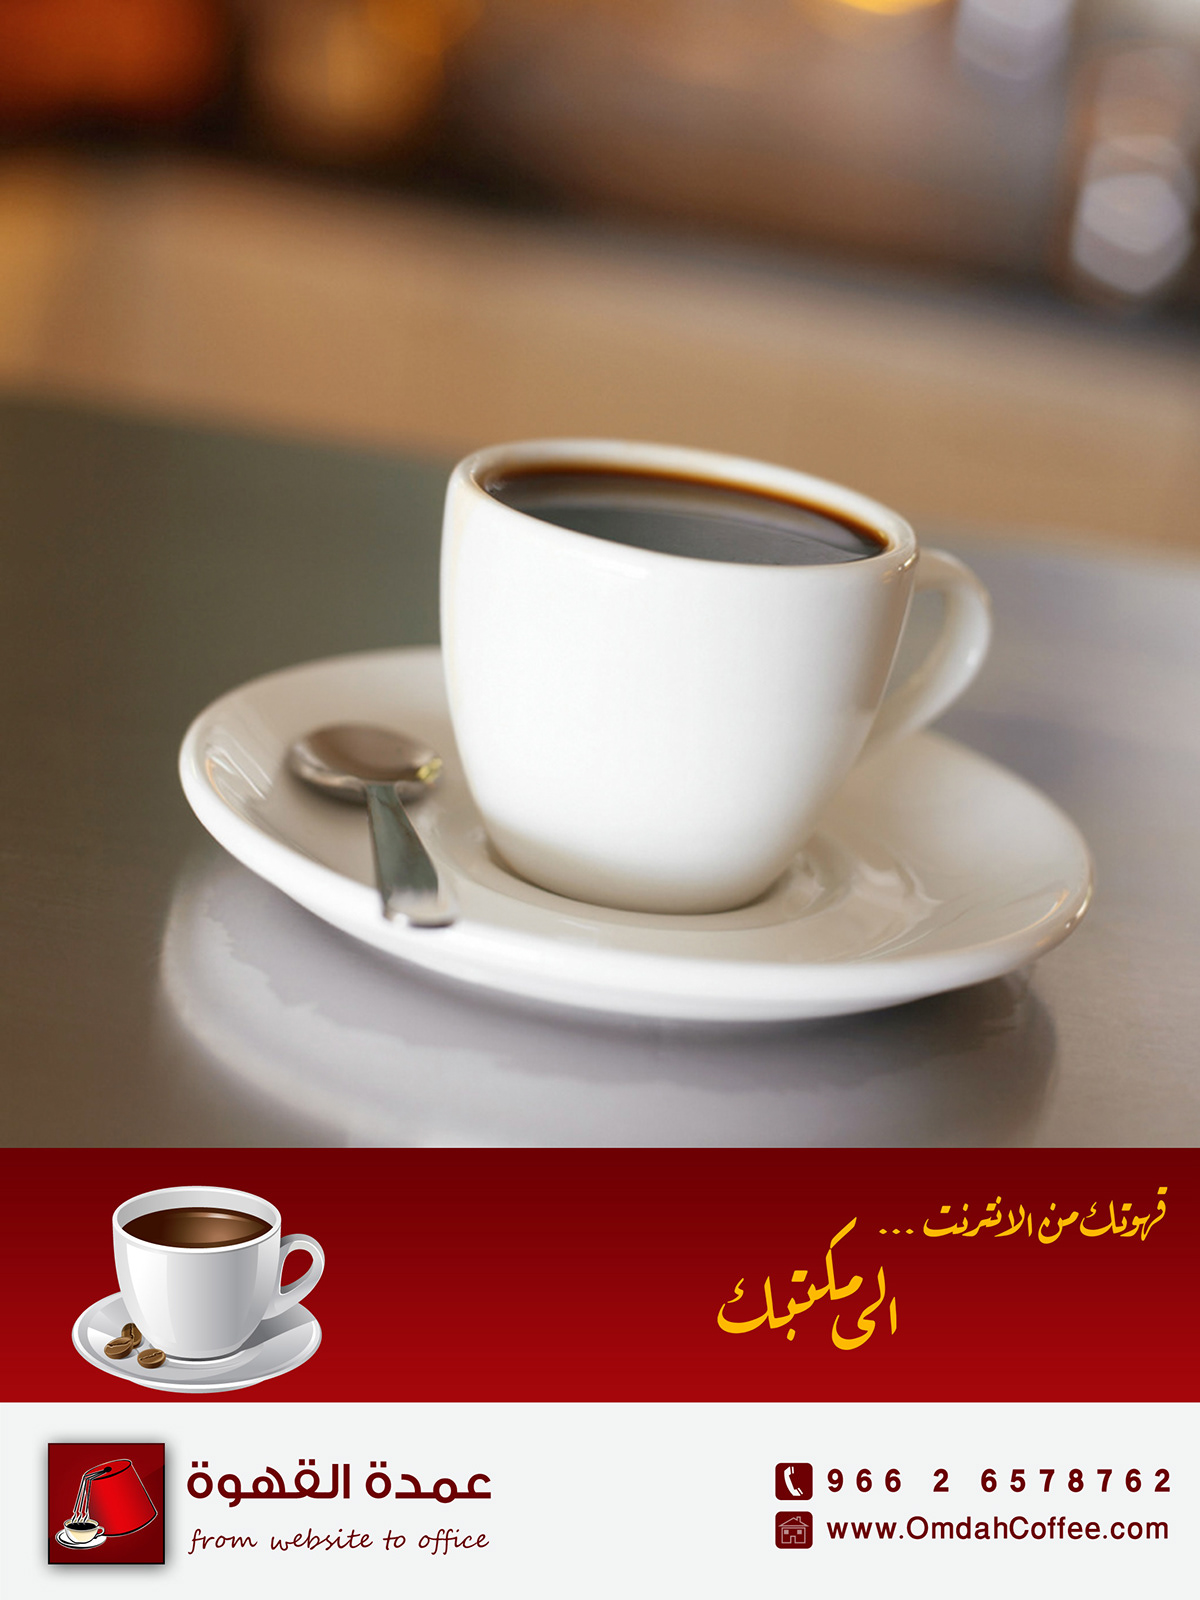 Coffee Salehhalil saleh ADV